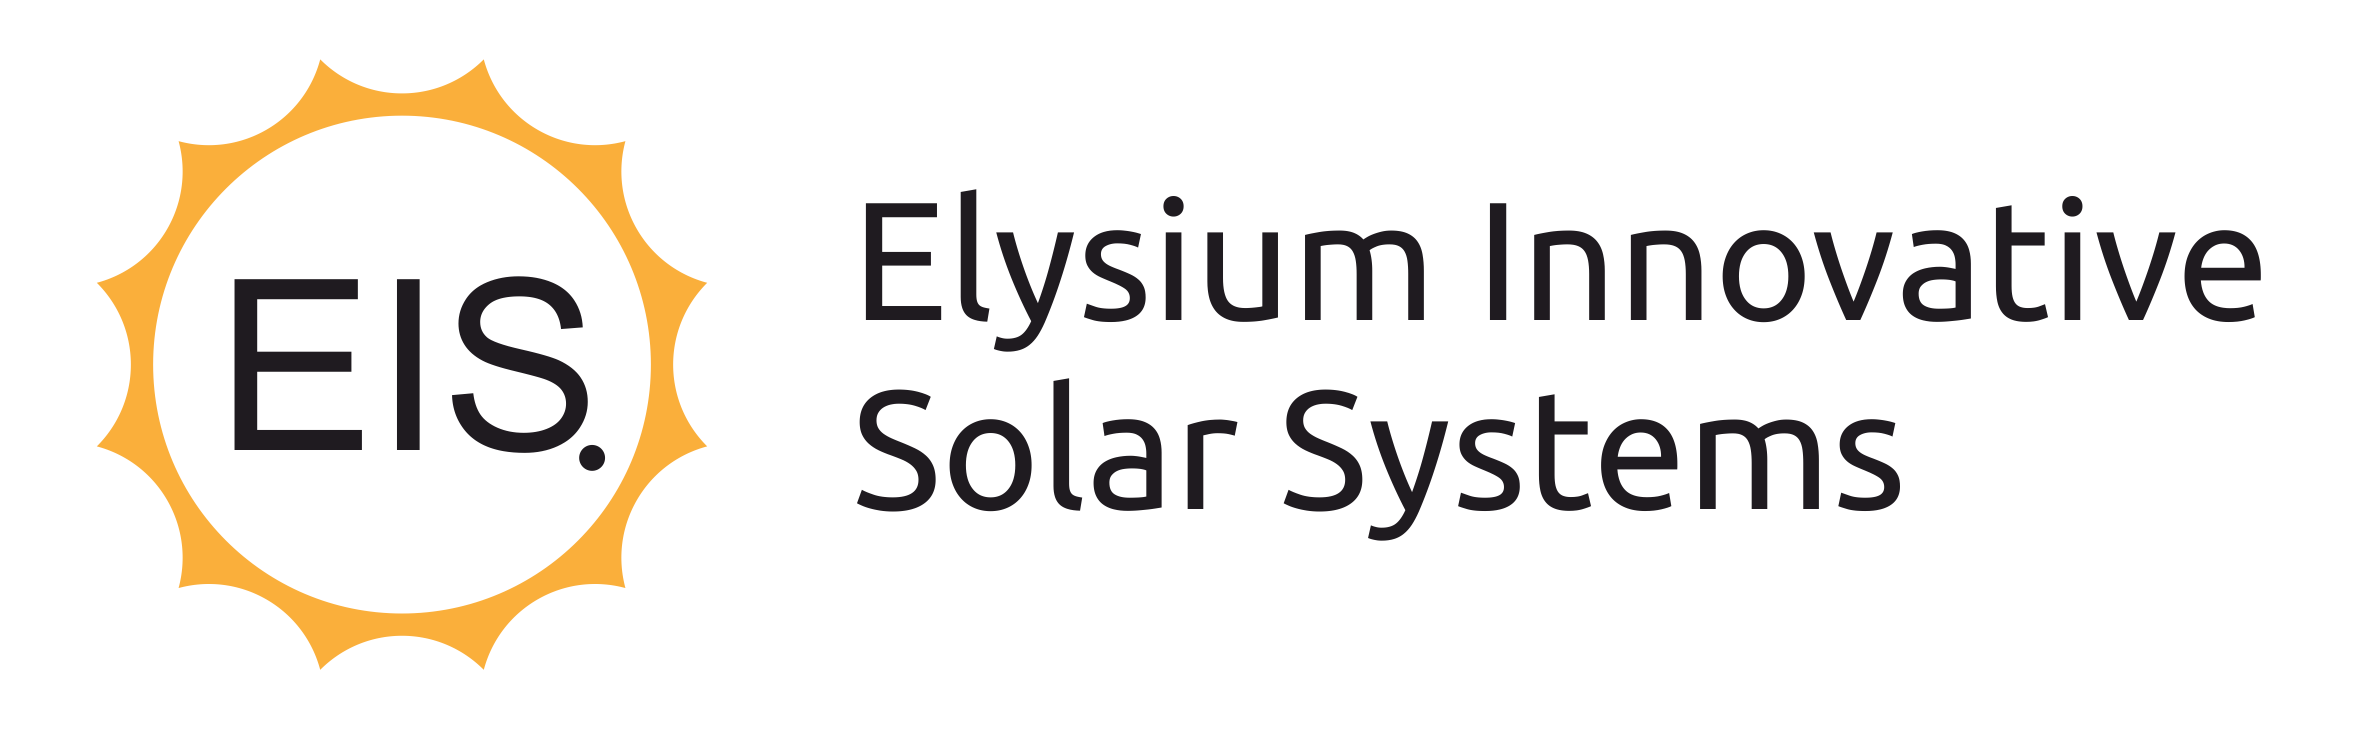 Elysium Innovative Solar Systems